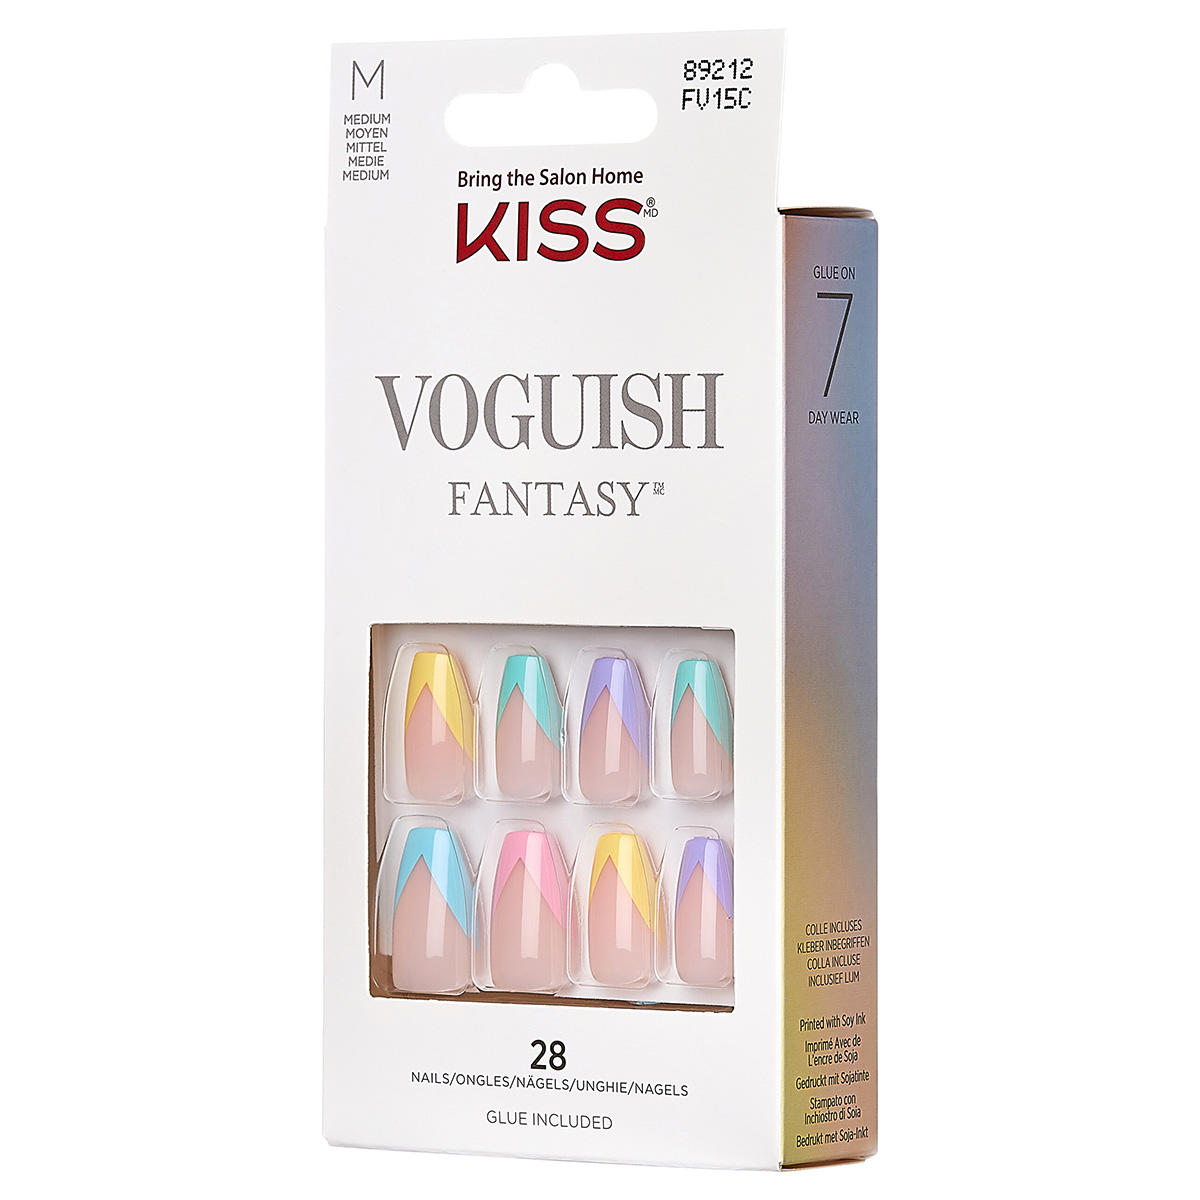 KISS Voguish Fantasy Nails - Candies  - 4